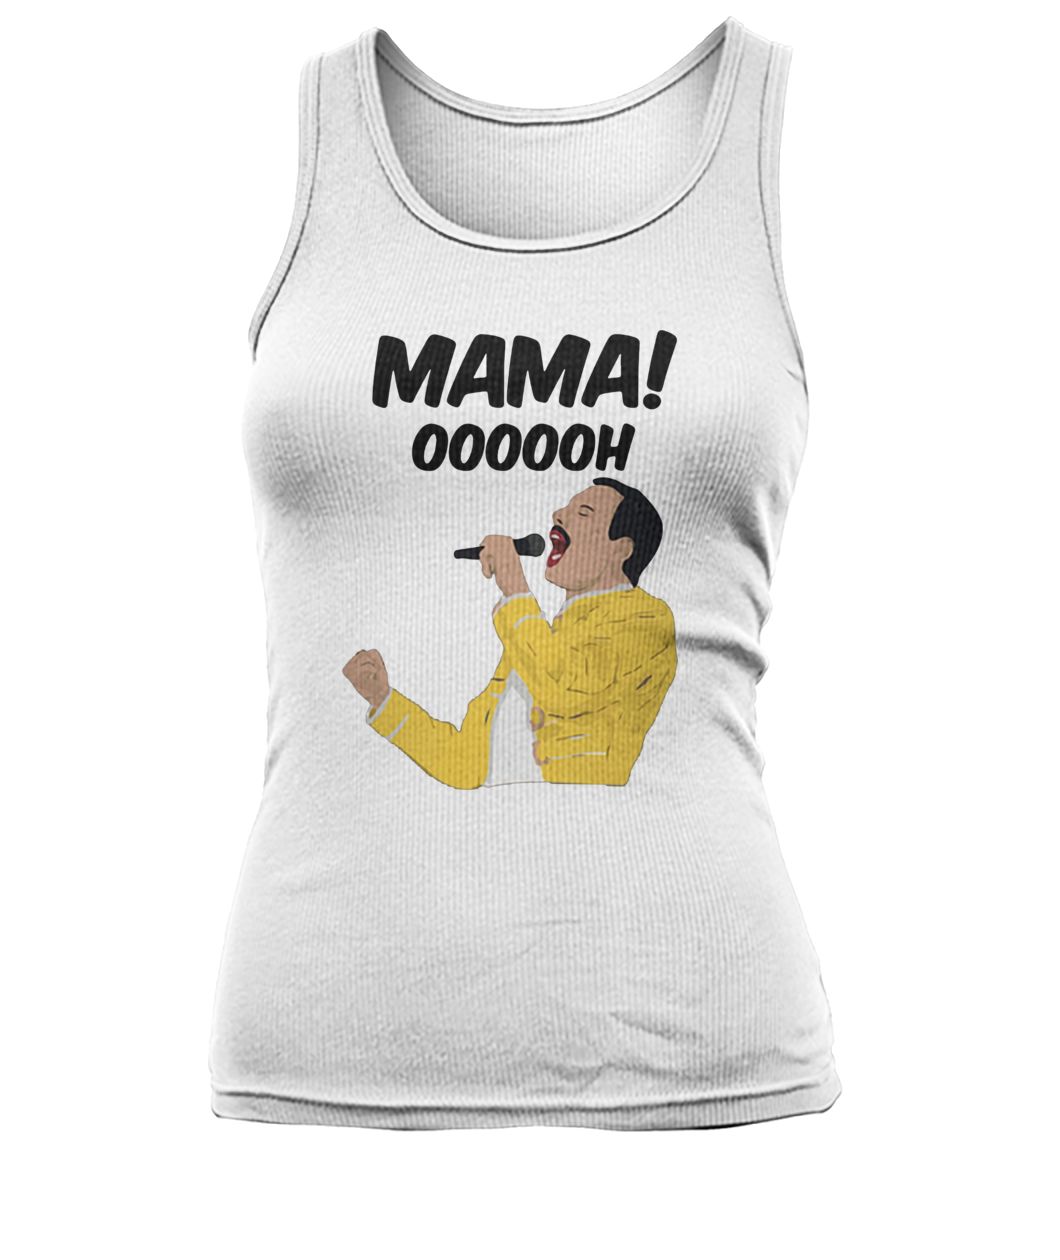 Freddie mercury mama oooooh women's tank top